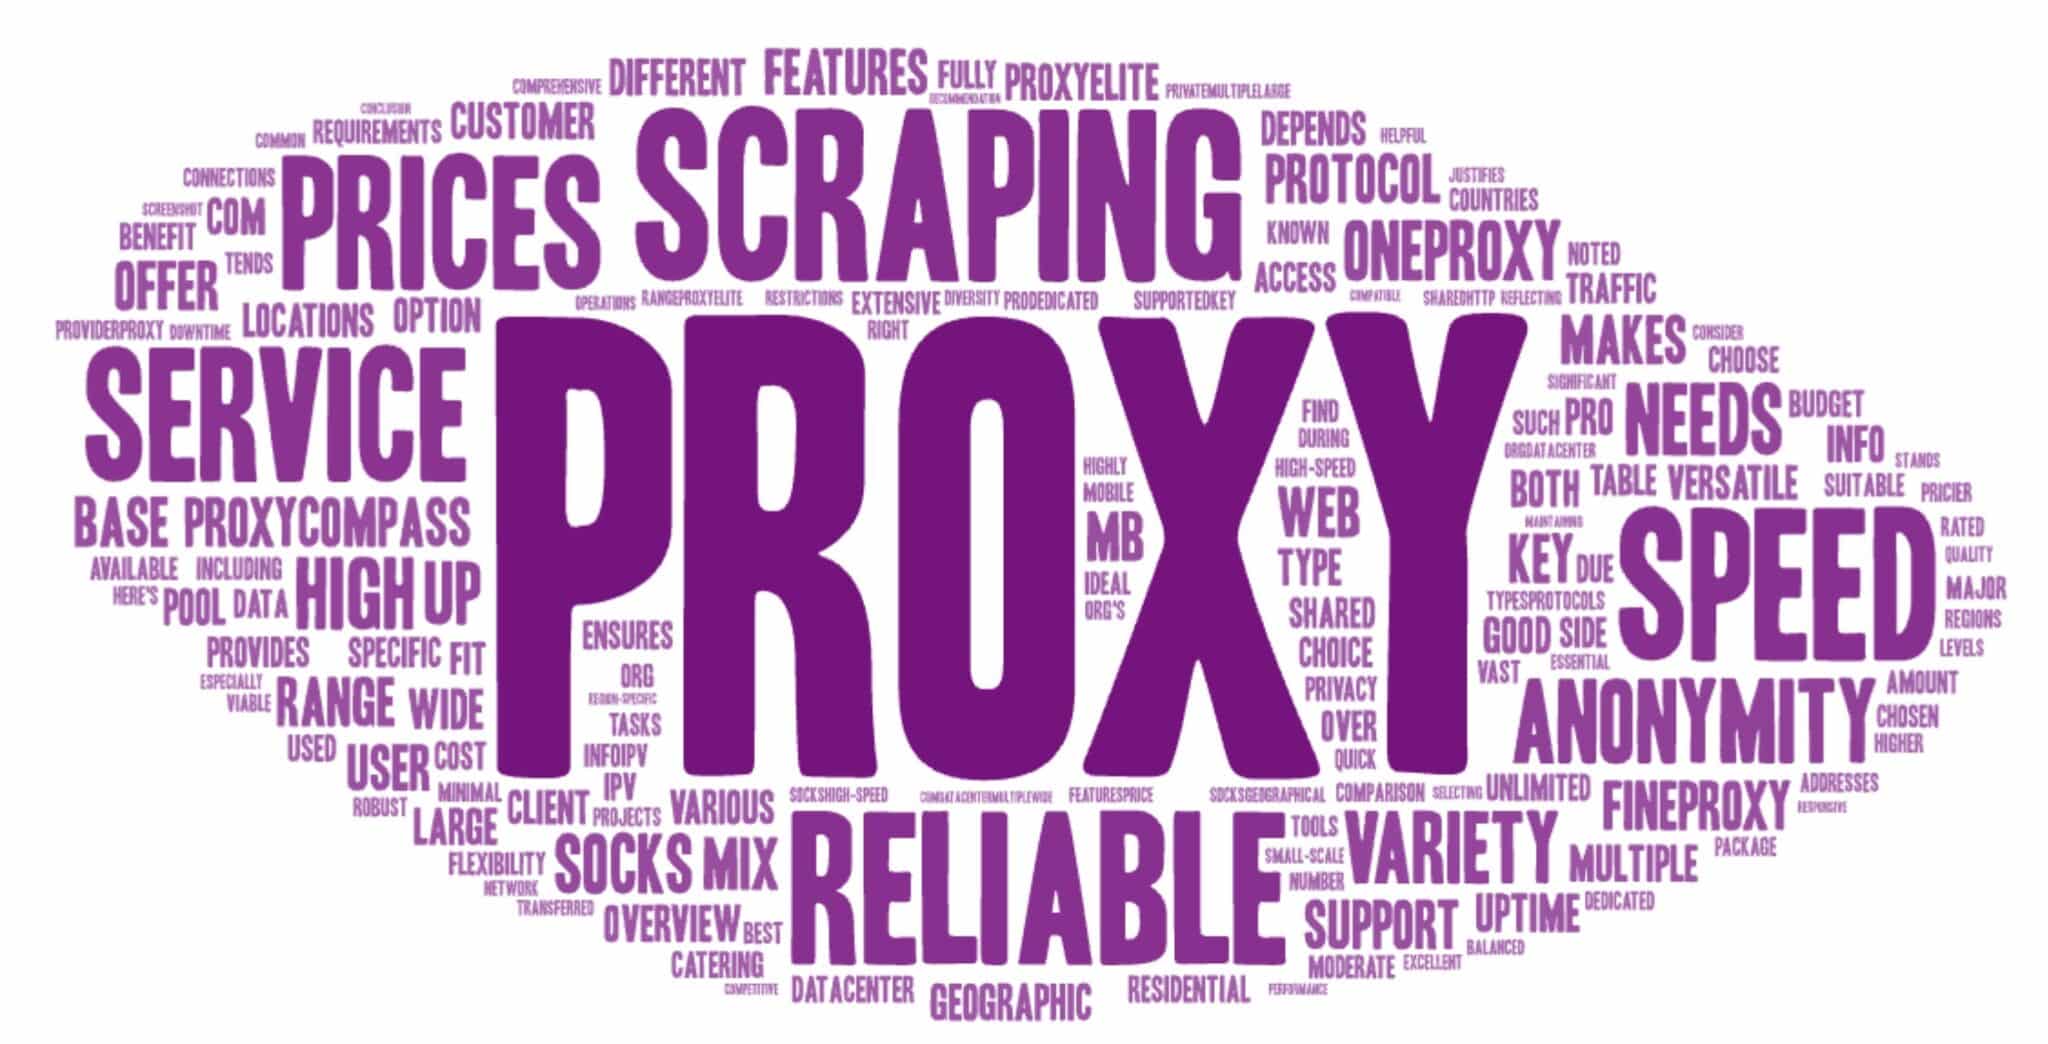 Melhores provedores de proxy de web scraping: TOP 4